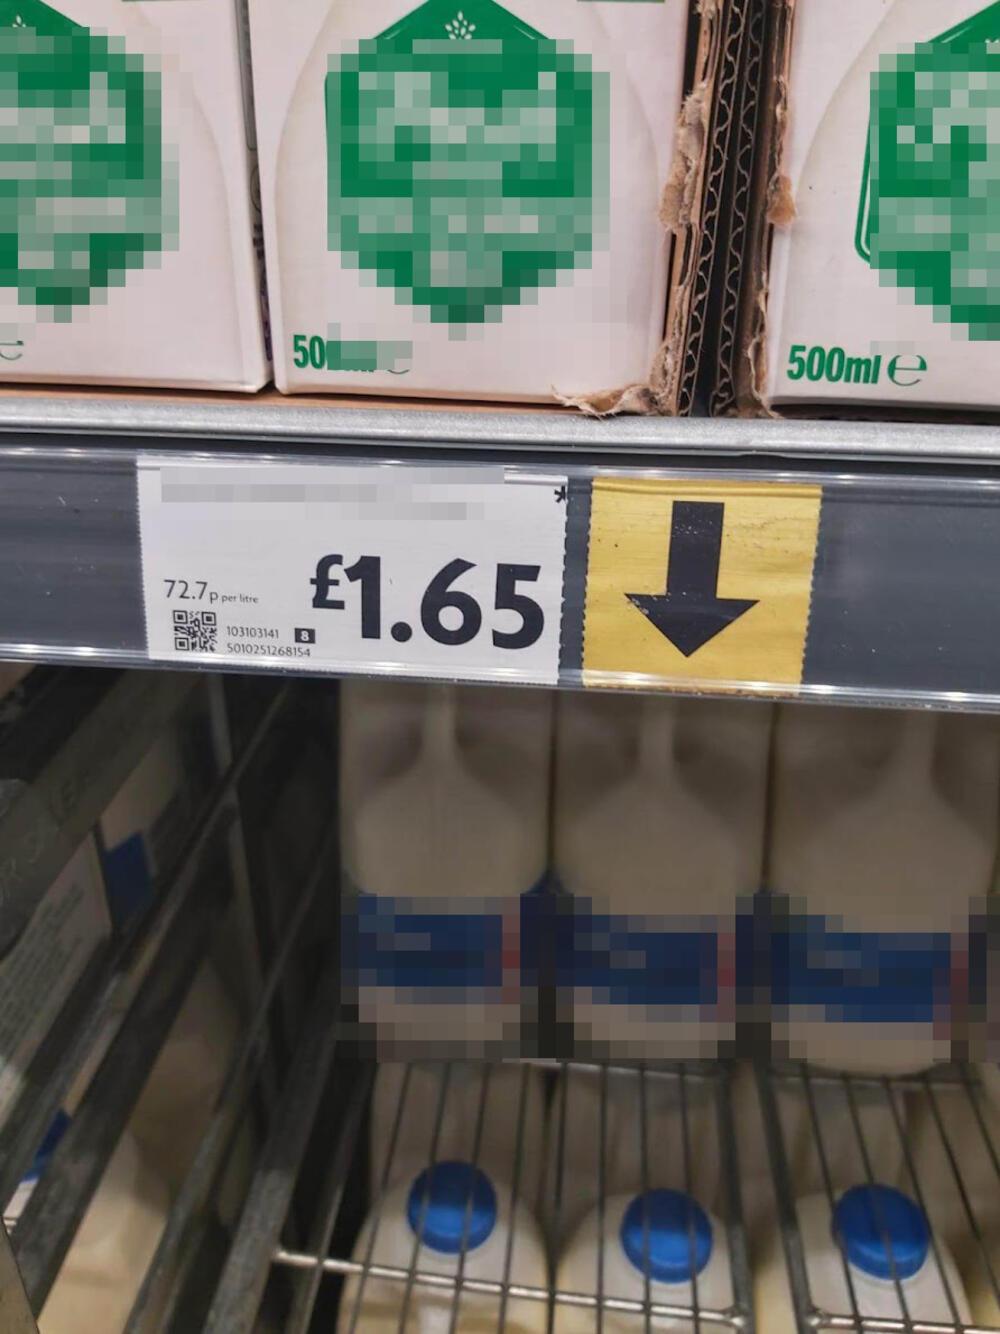 Cena mleka u Lesteru